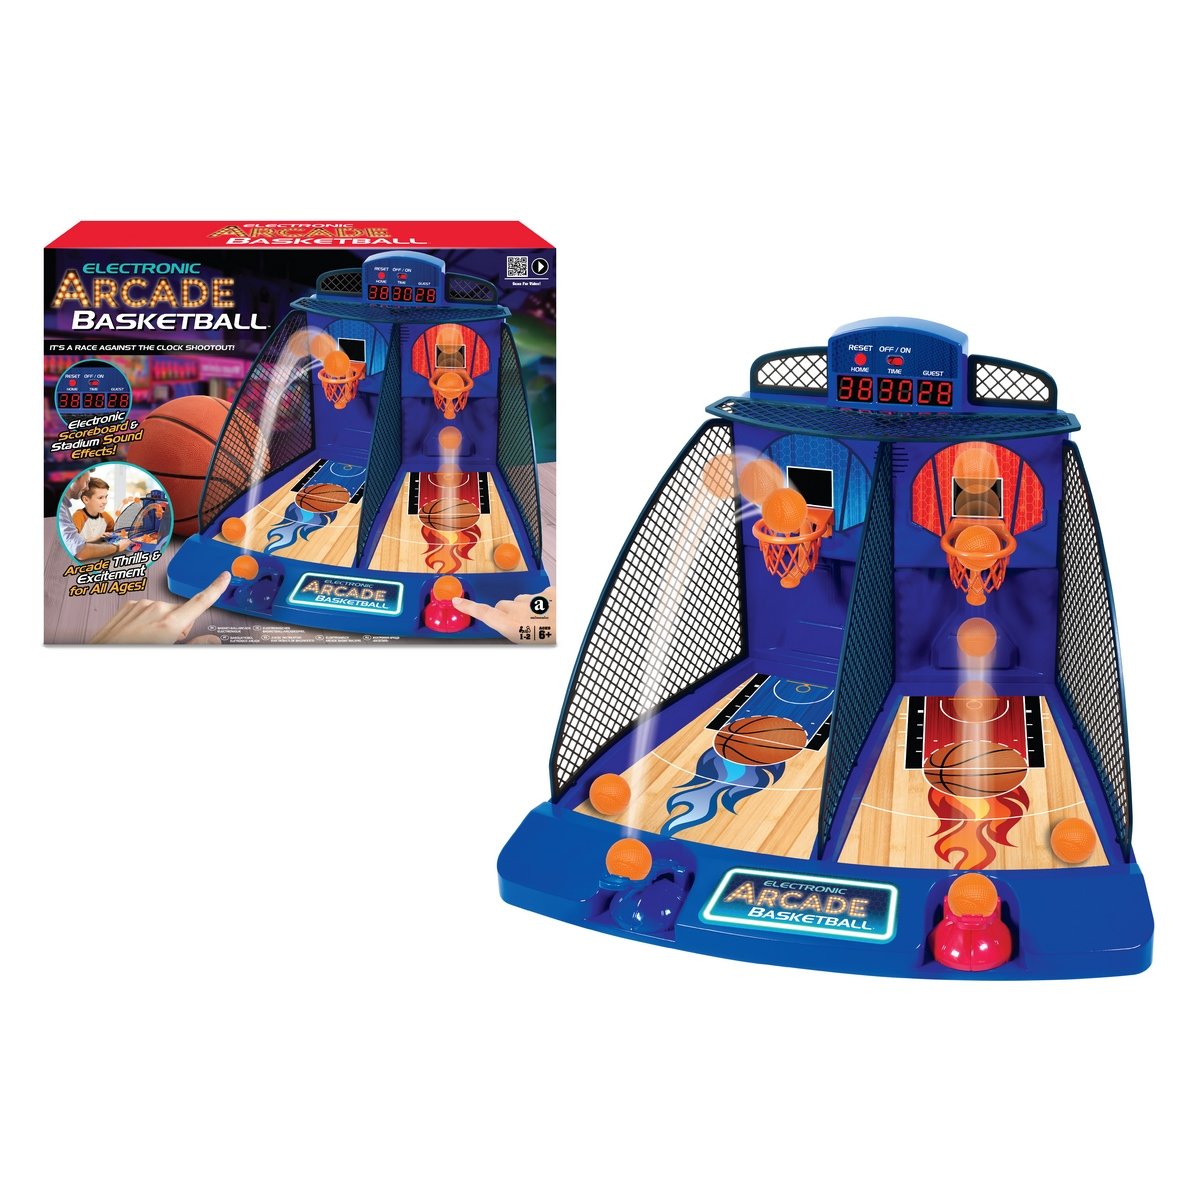 Jeu d'arcade basket Zig Zag jeux action : King Jouet, Jeux d'ambiance Zig  Zag jeux action - Jeux de société